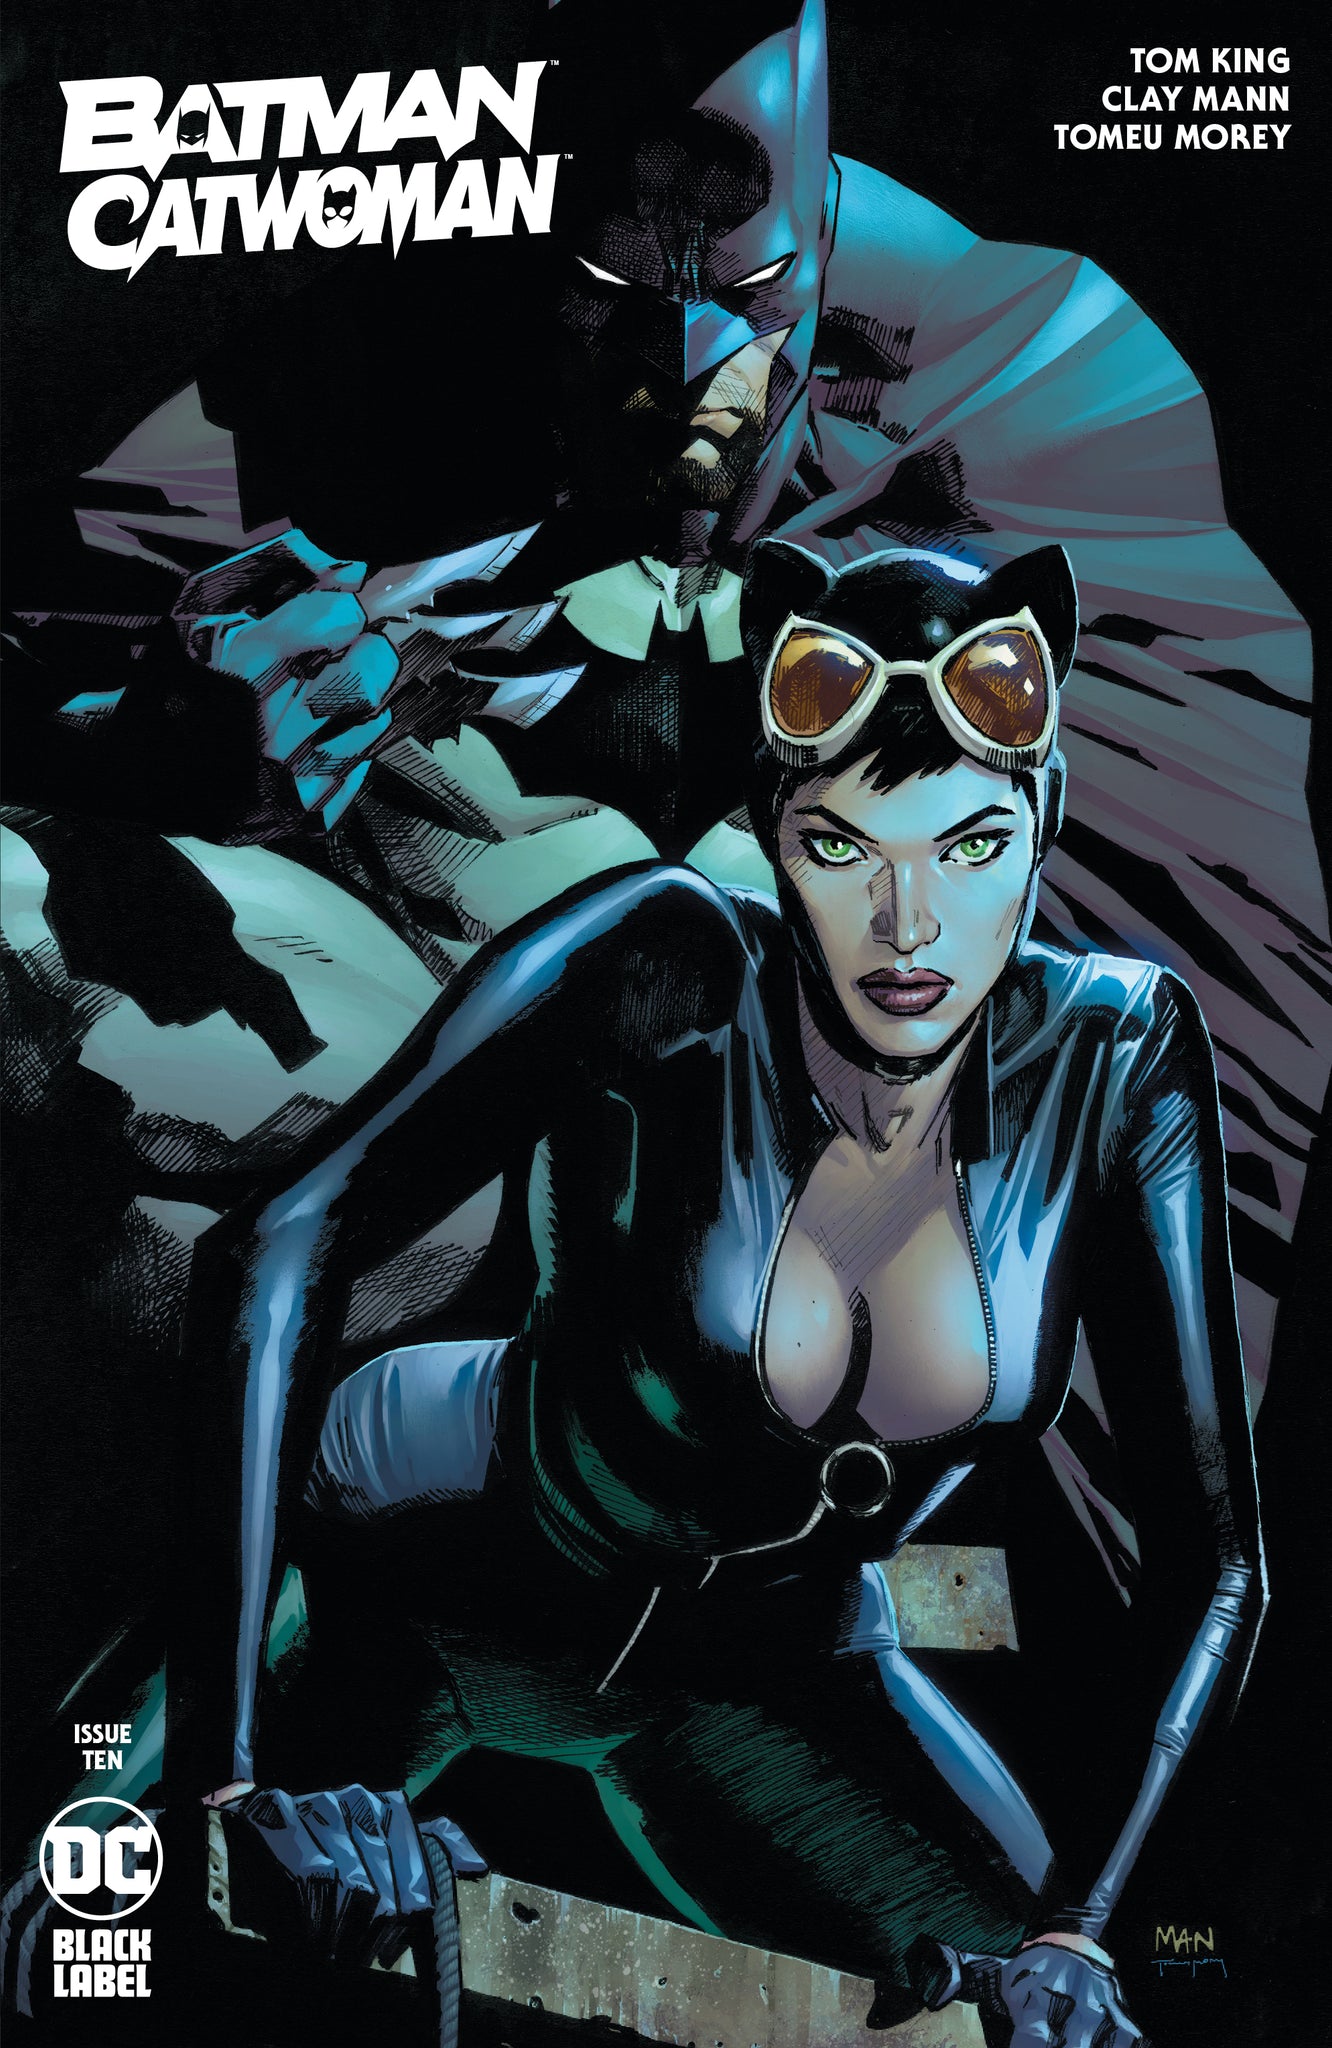 BATMAN CATWOMAN #10 (OF 12)